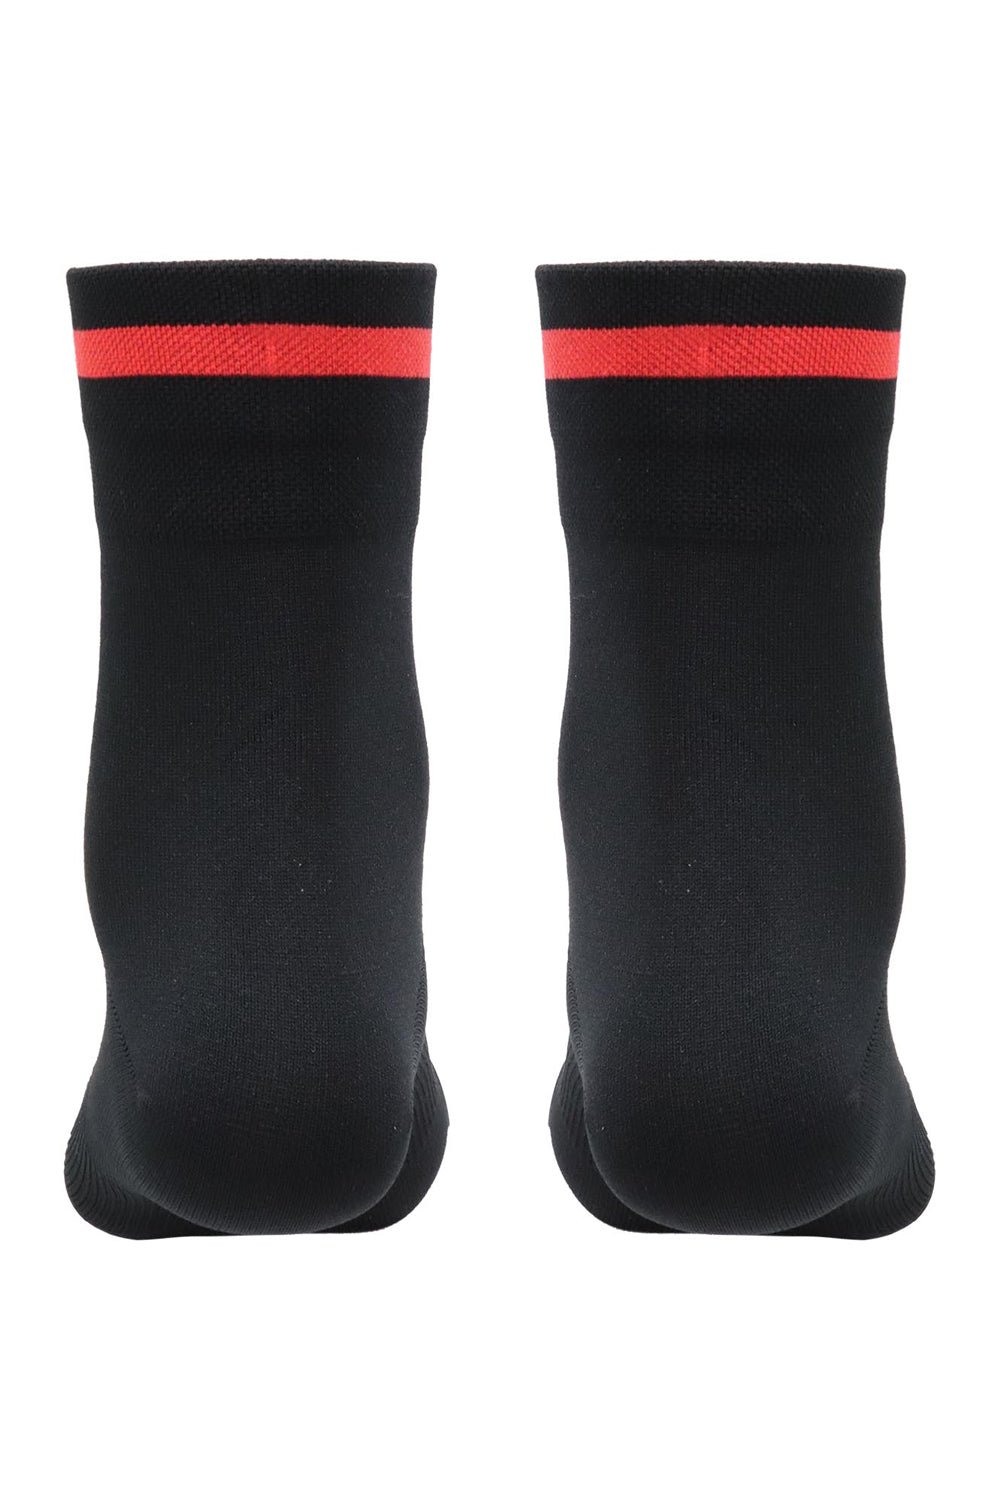 Sundried Black Cycle Socks S21 Socks Activewear